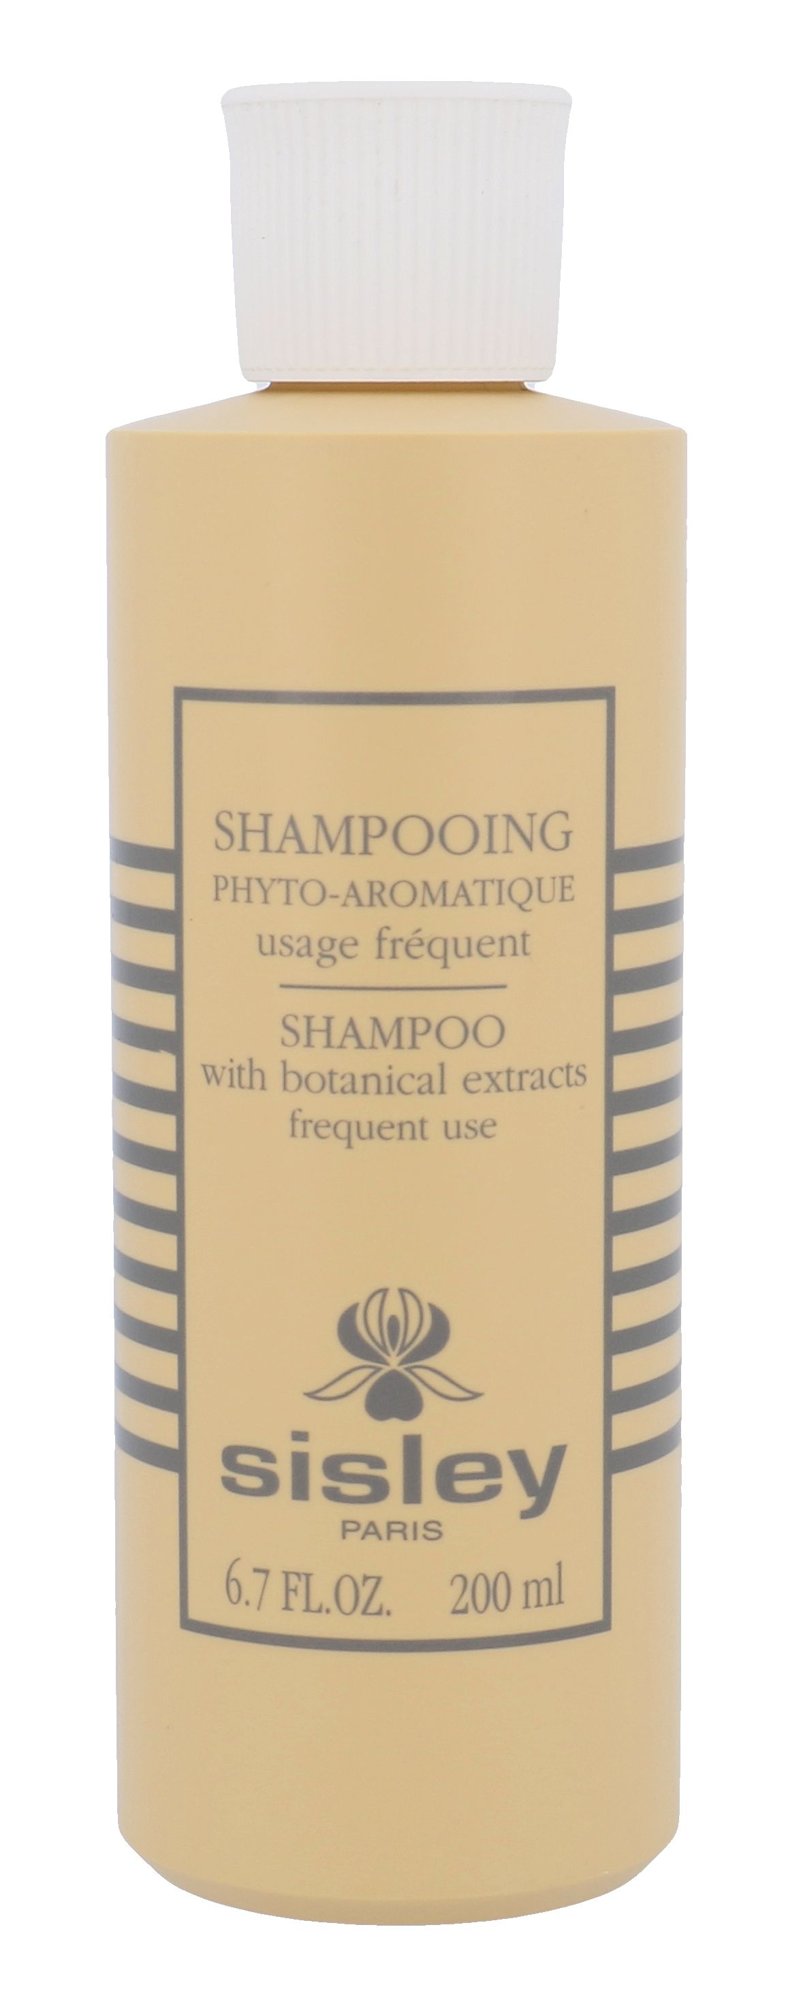 Sisley Shampoo With Botanical Extracts